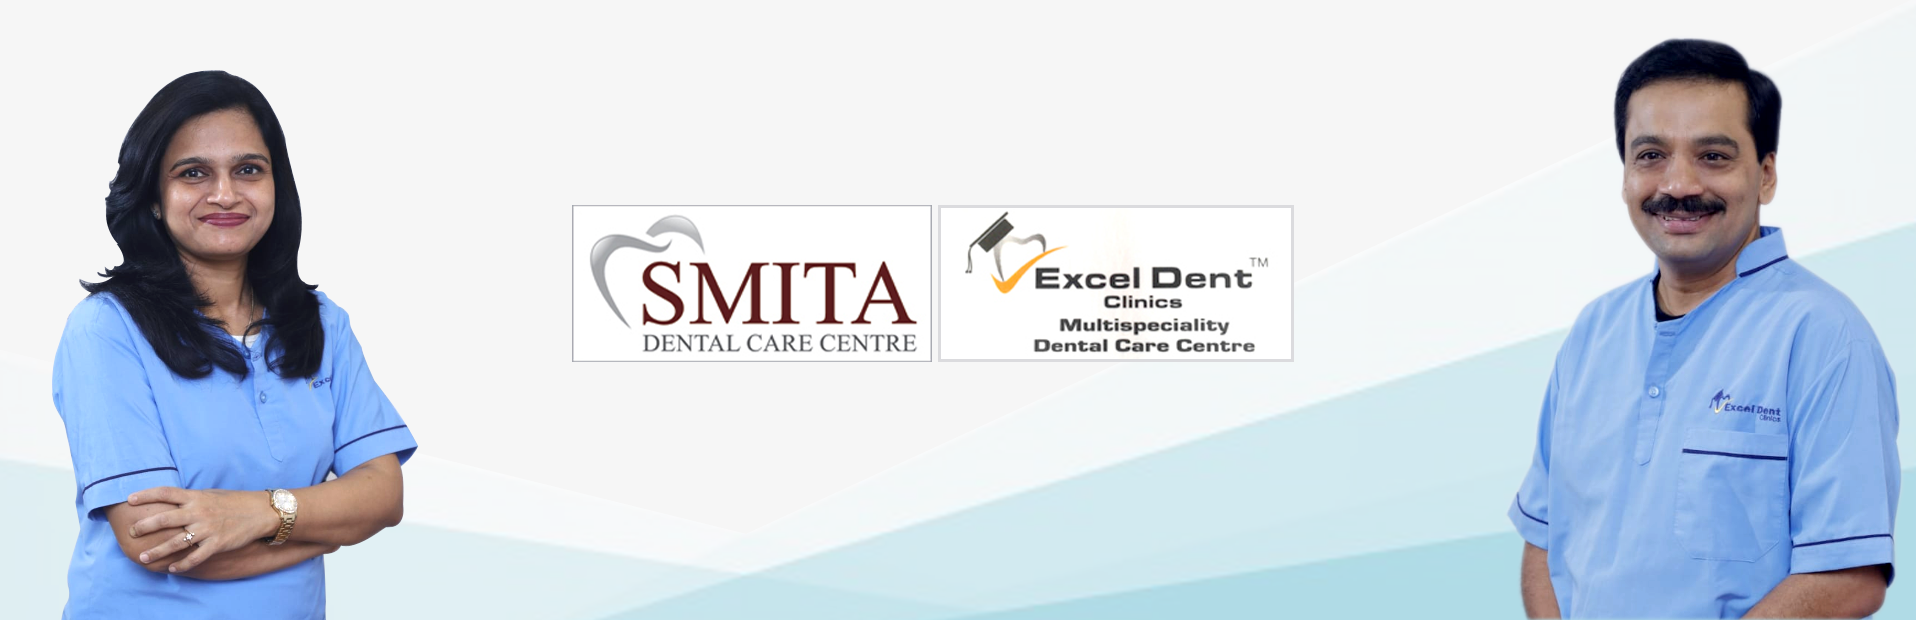 about Smita dental